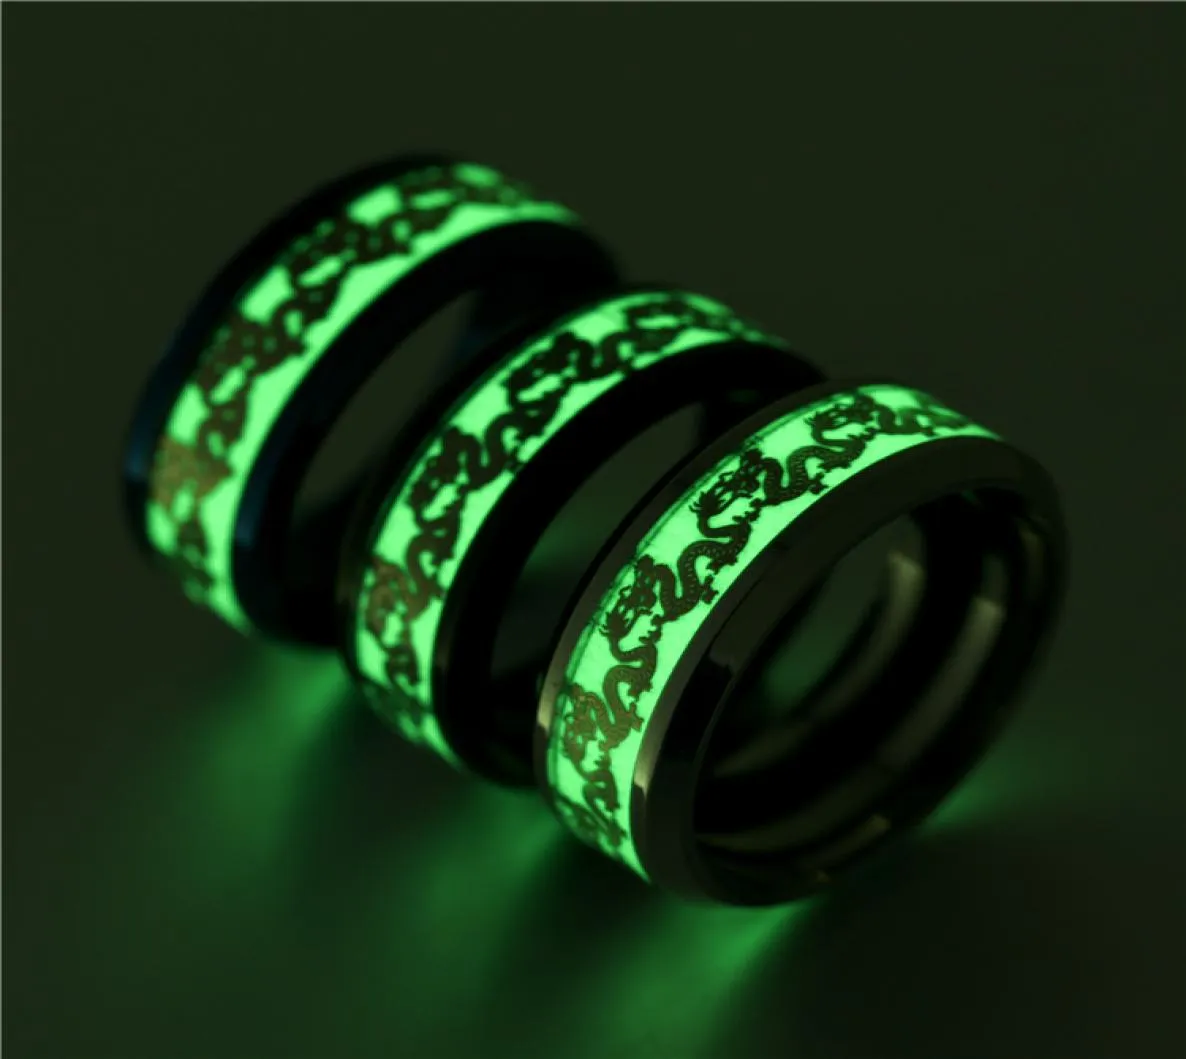 8 mm Titanium Steel New Luminous Dragon Pierścień Popularne pierścienie biżuterii Designer Whole9010548